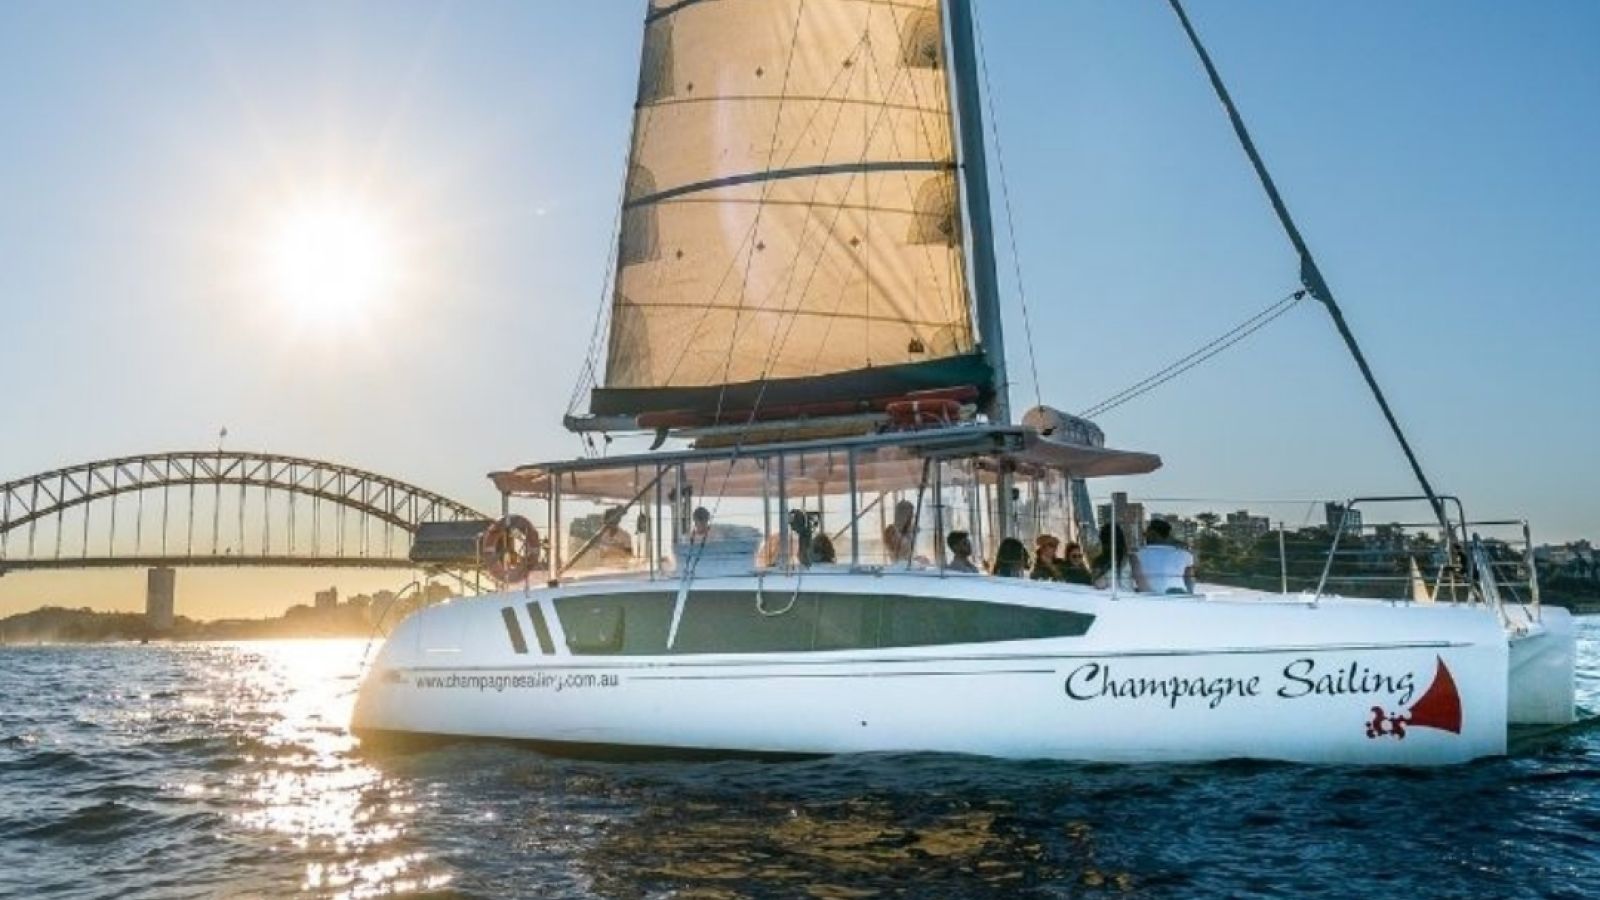 Champagne Sailing - Sydney Harbour Boat Charter